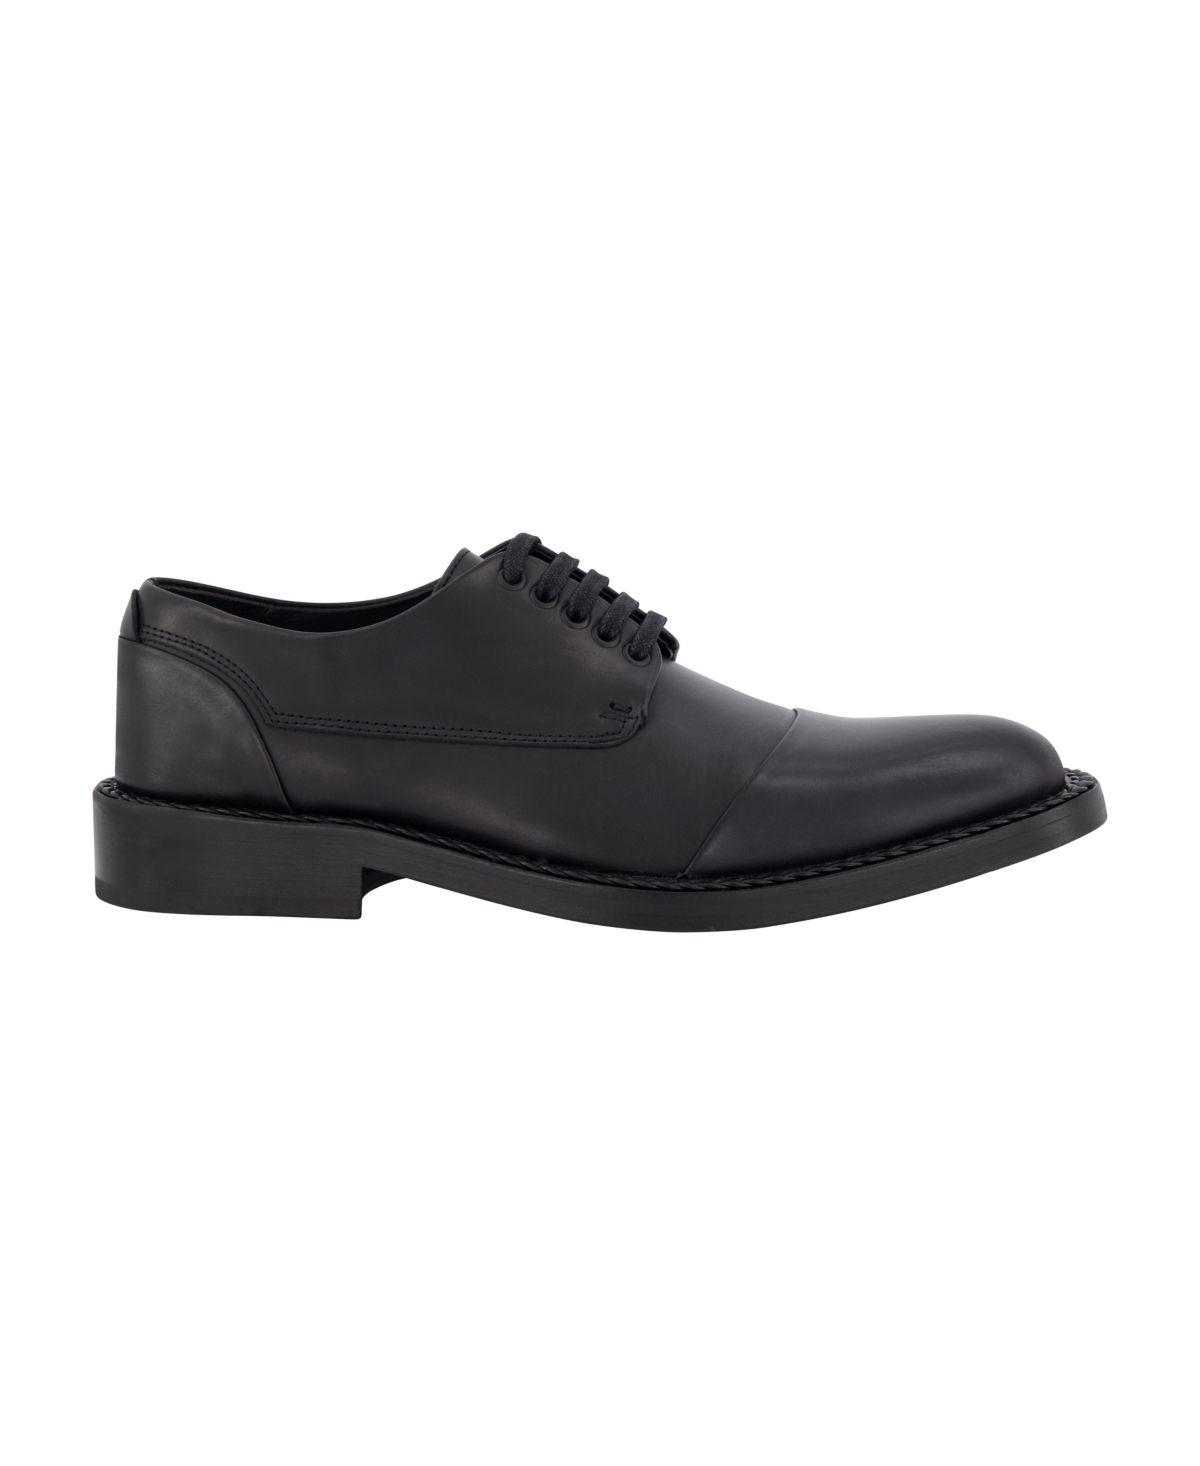 Men's White Label Leather Cap Toe Dress Shoes - Black